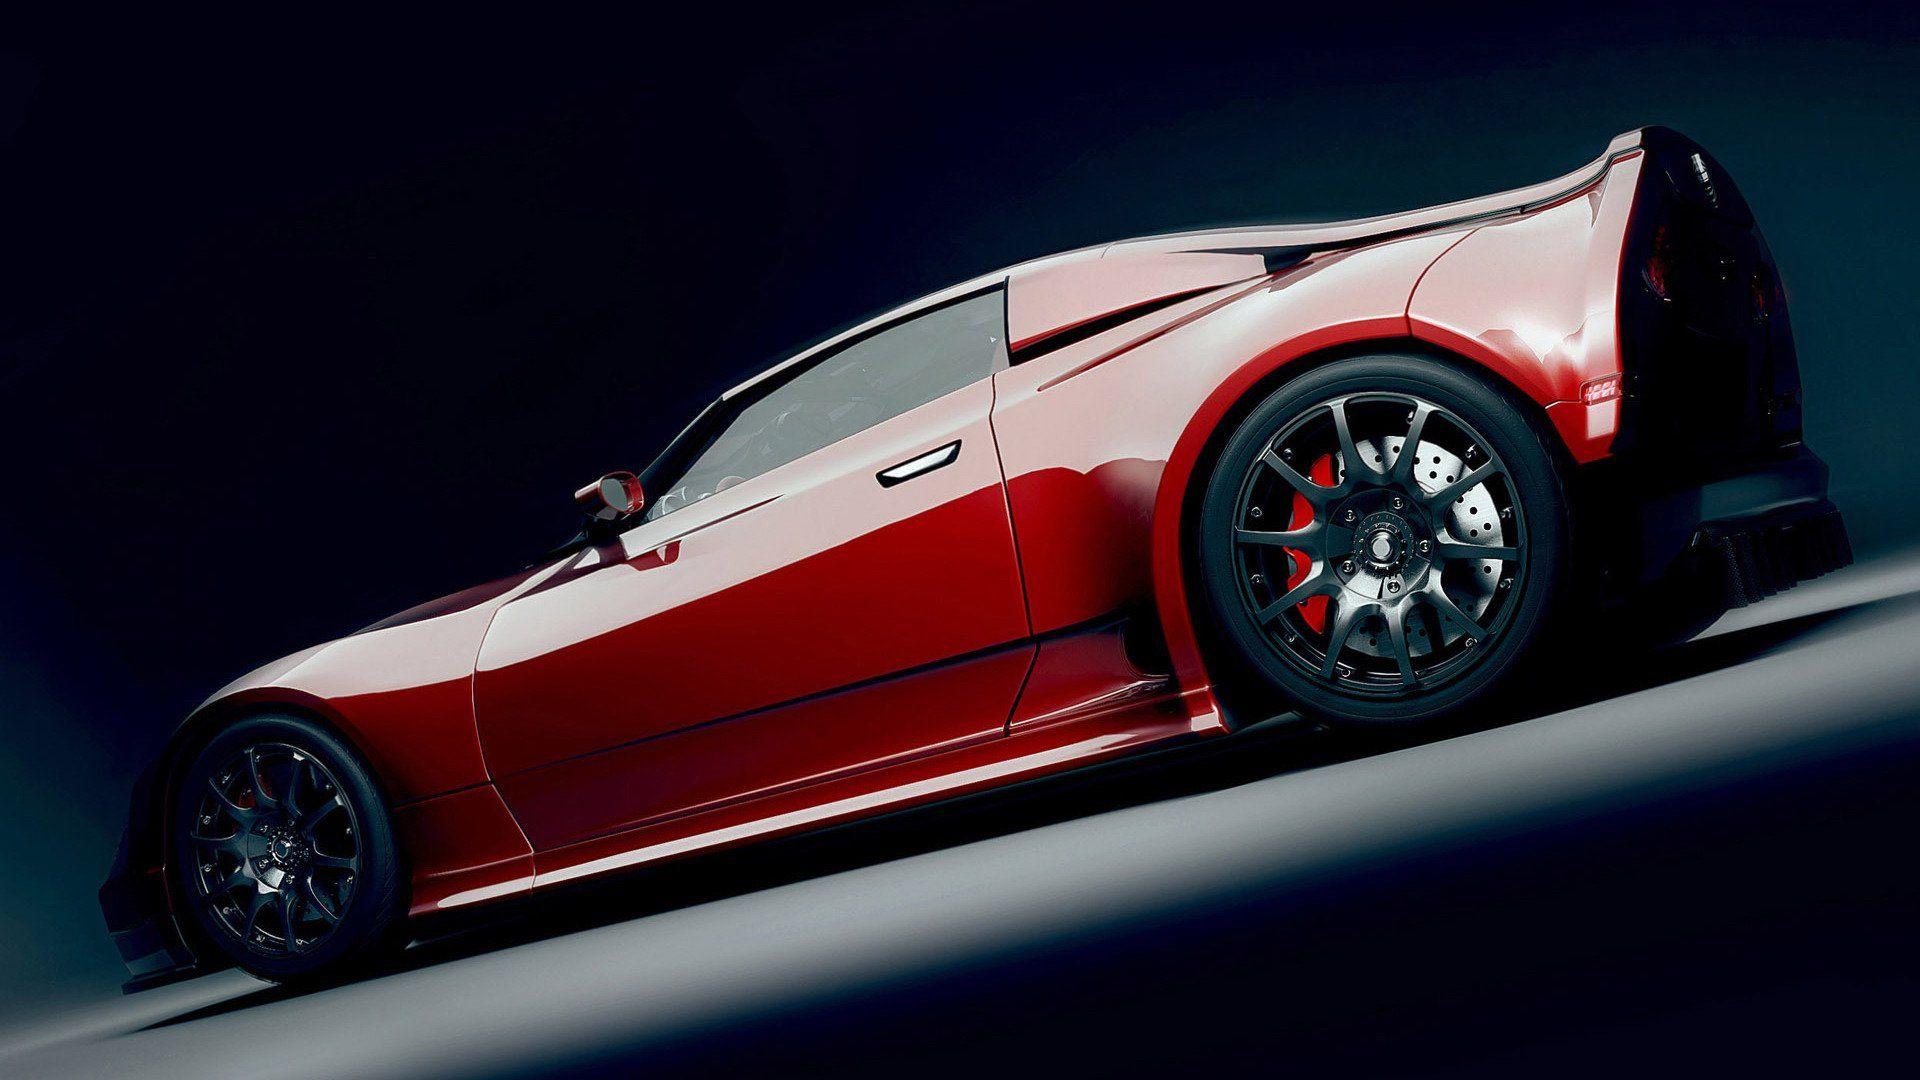 Corvette Full HD Wallpaper and Background Imagex1080